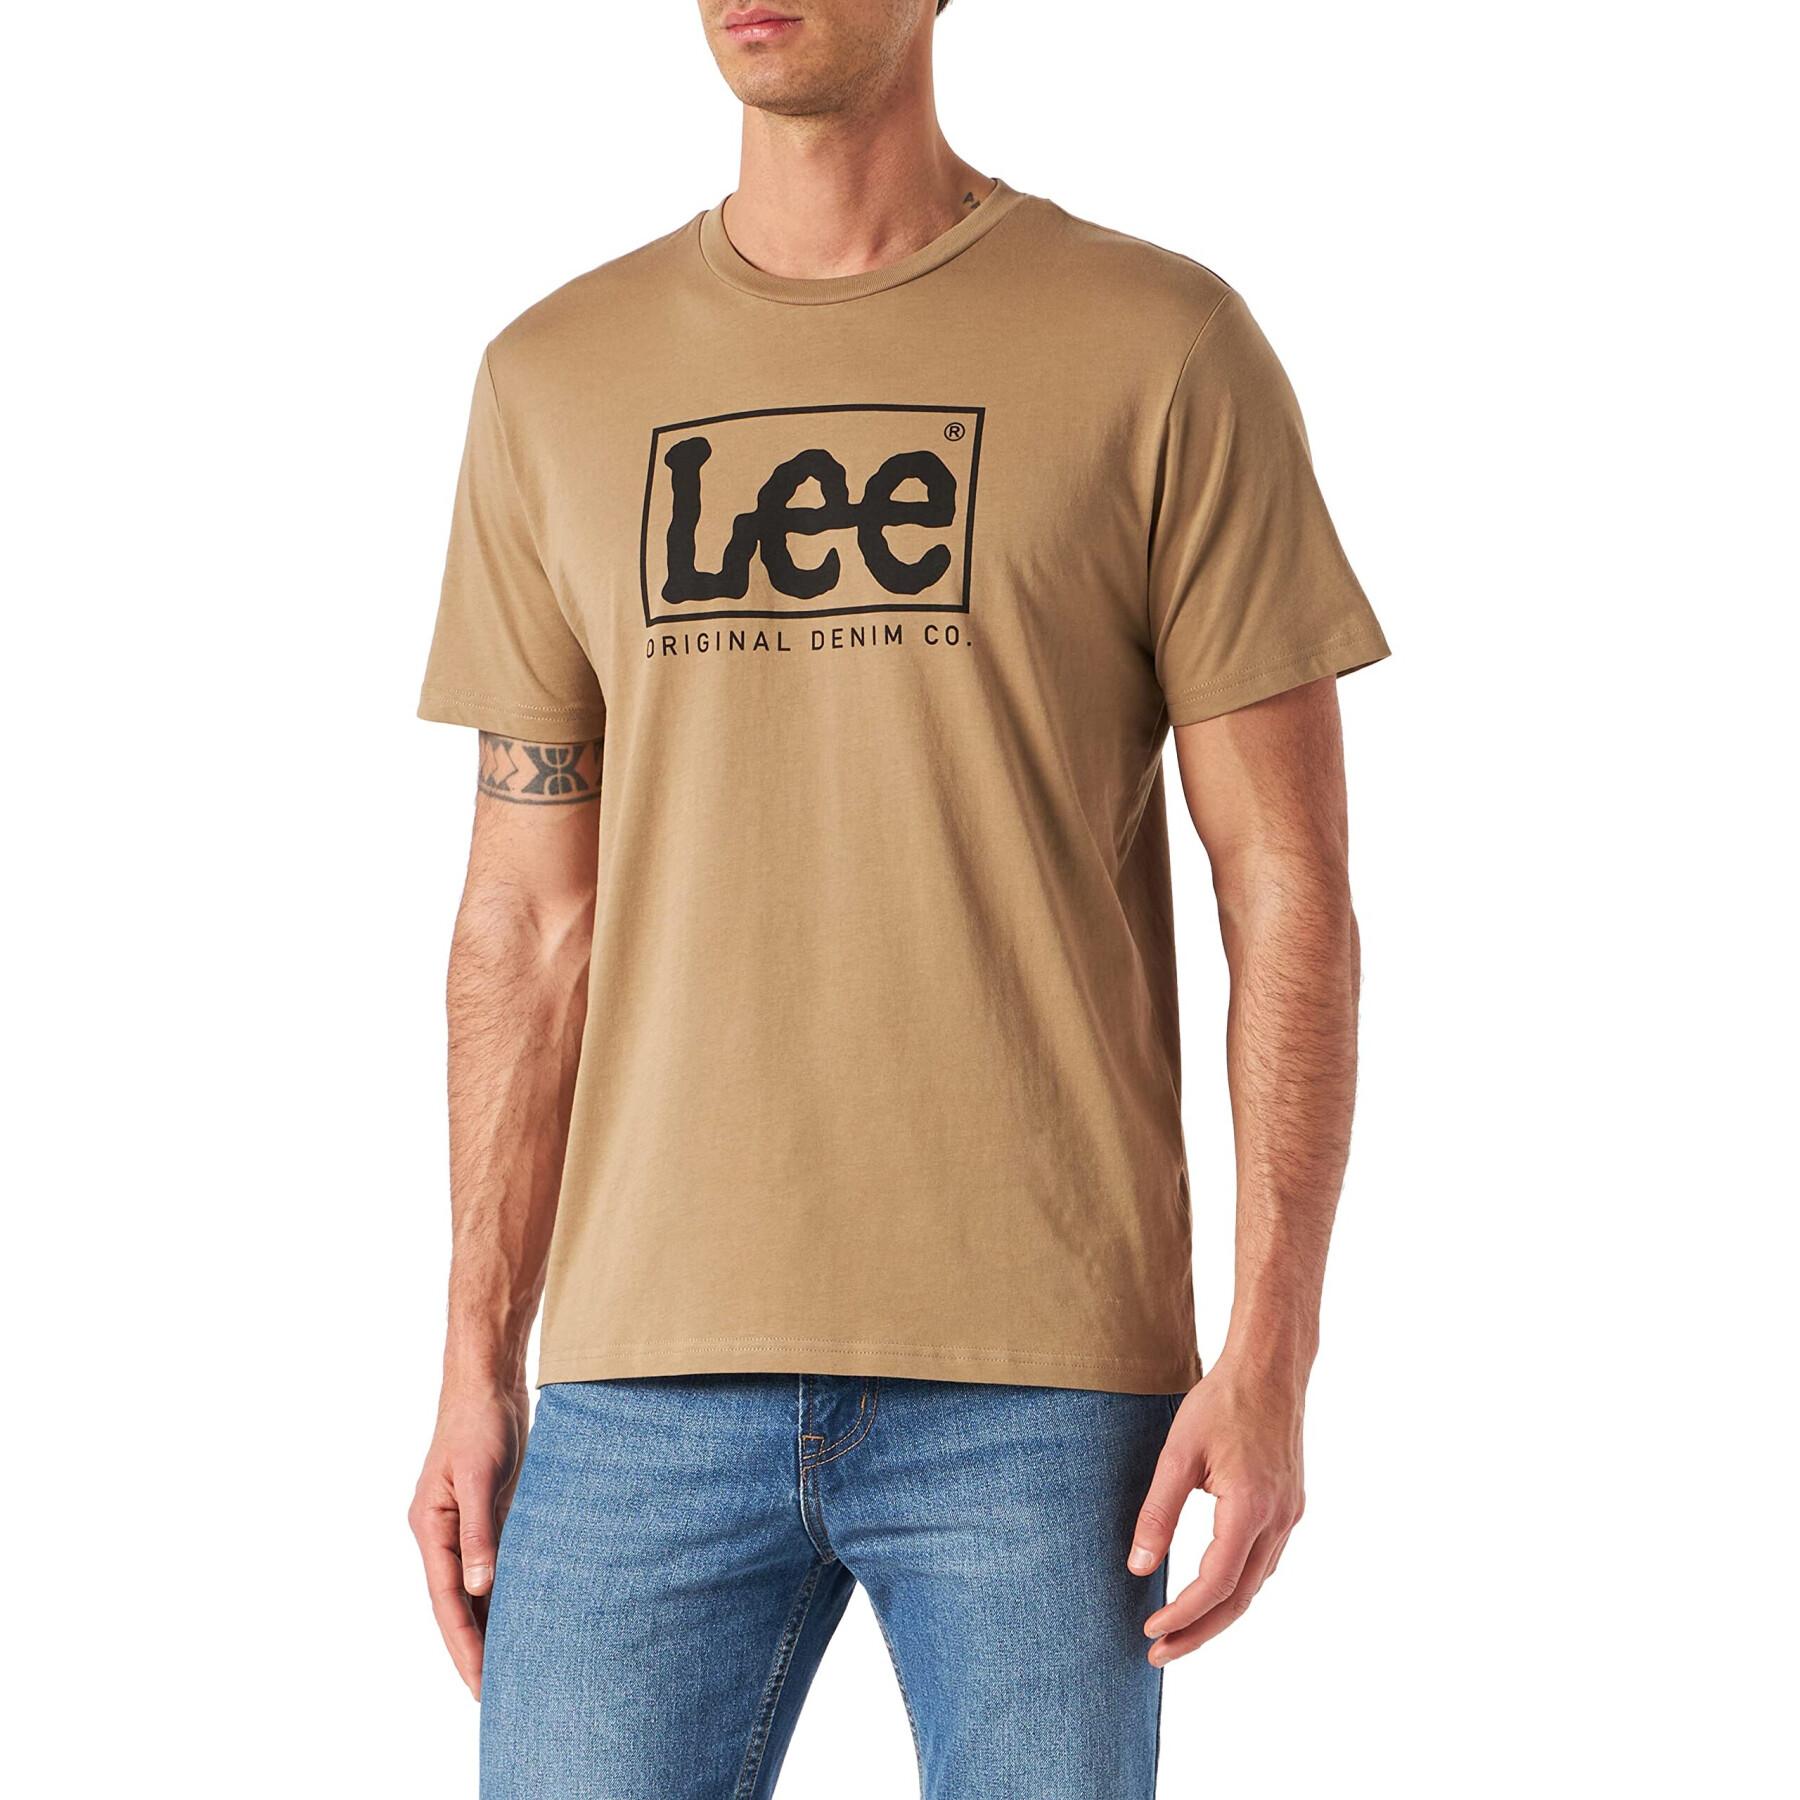 T-shirt Lee Wobbly Logo